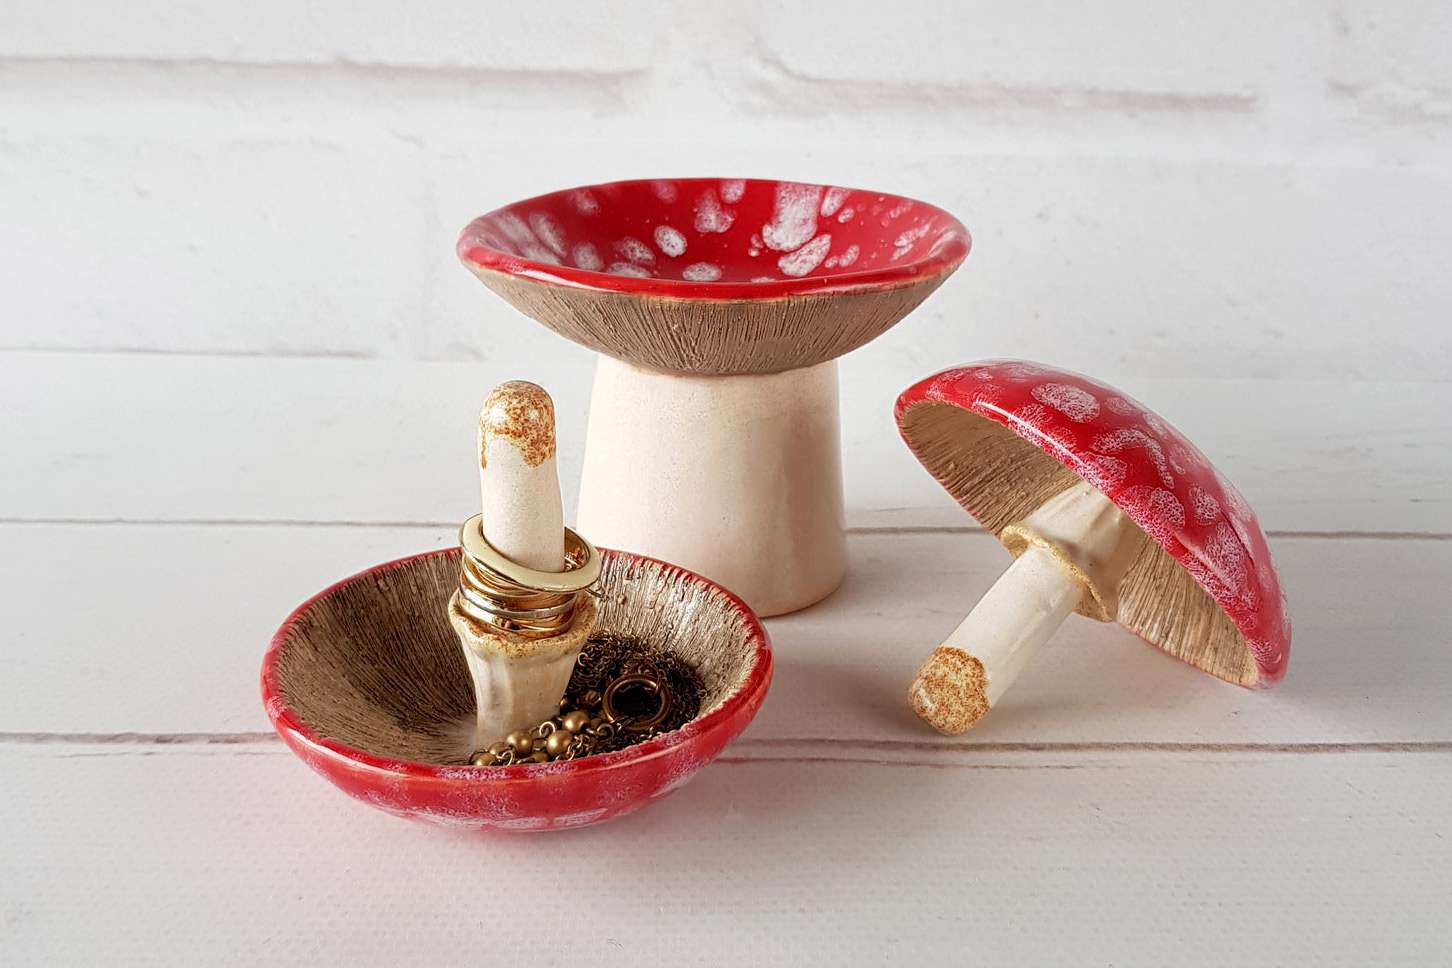 mushroom shaped ceramic jewelry dish